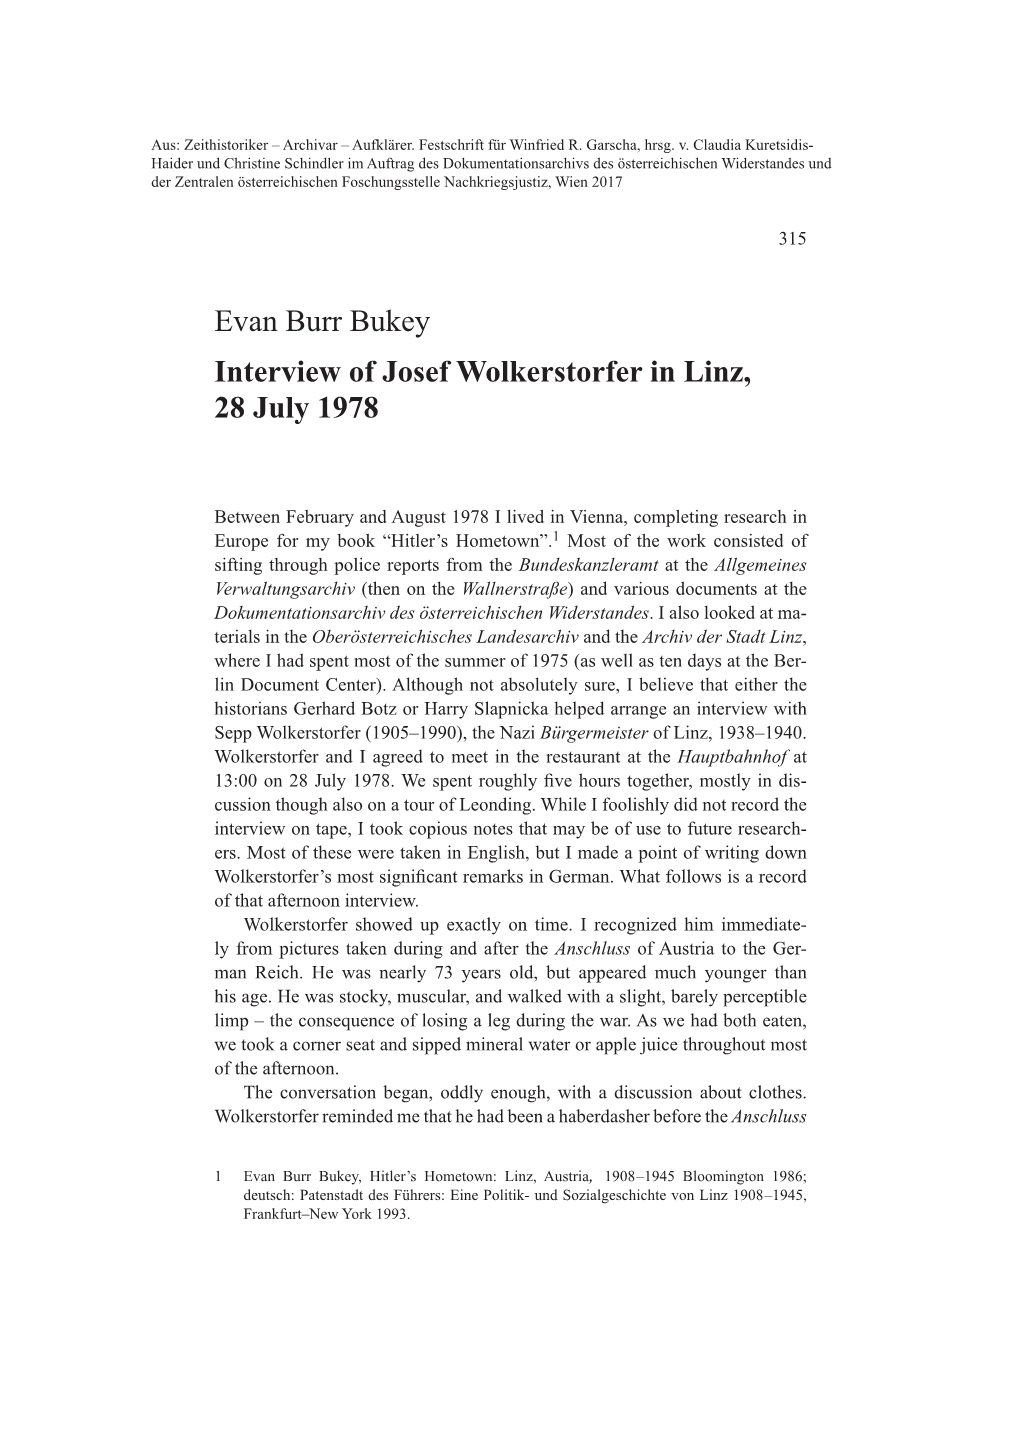 Evan Burr Bukey Interview of Josef Wolkerstorfer in Linz, 28 July 1978